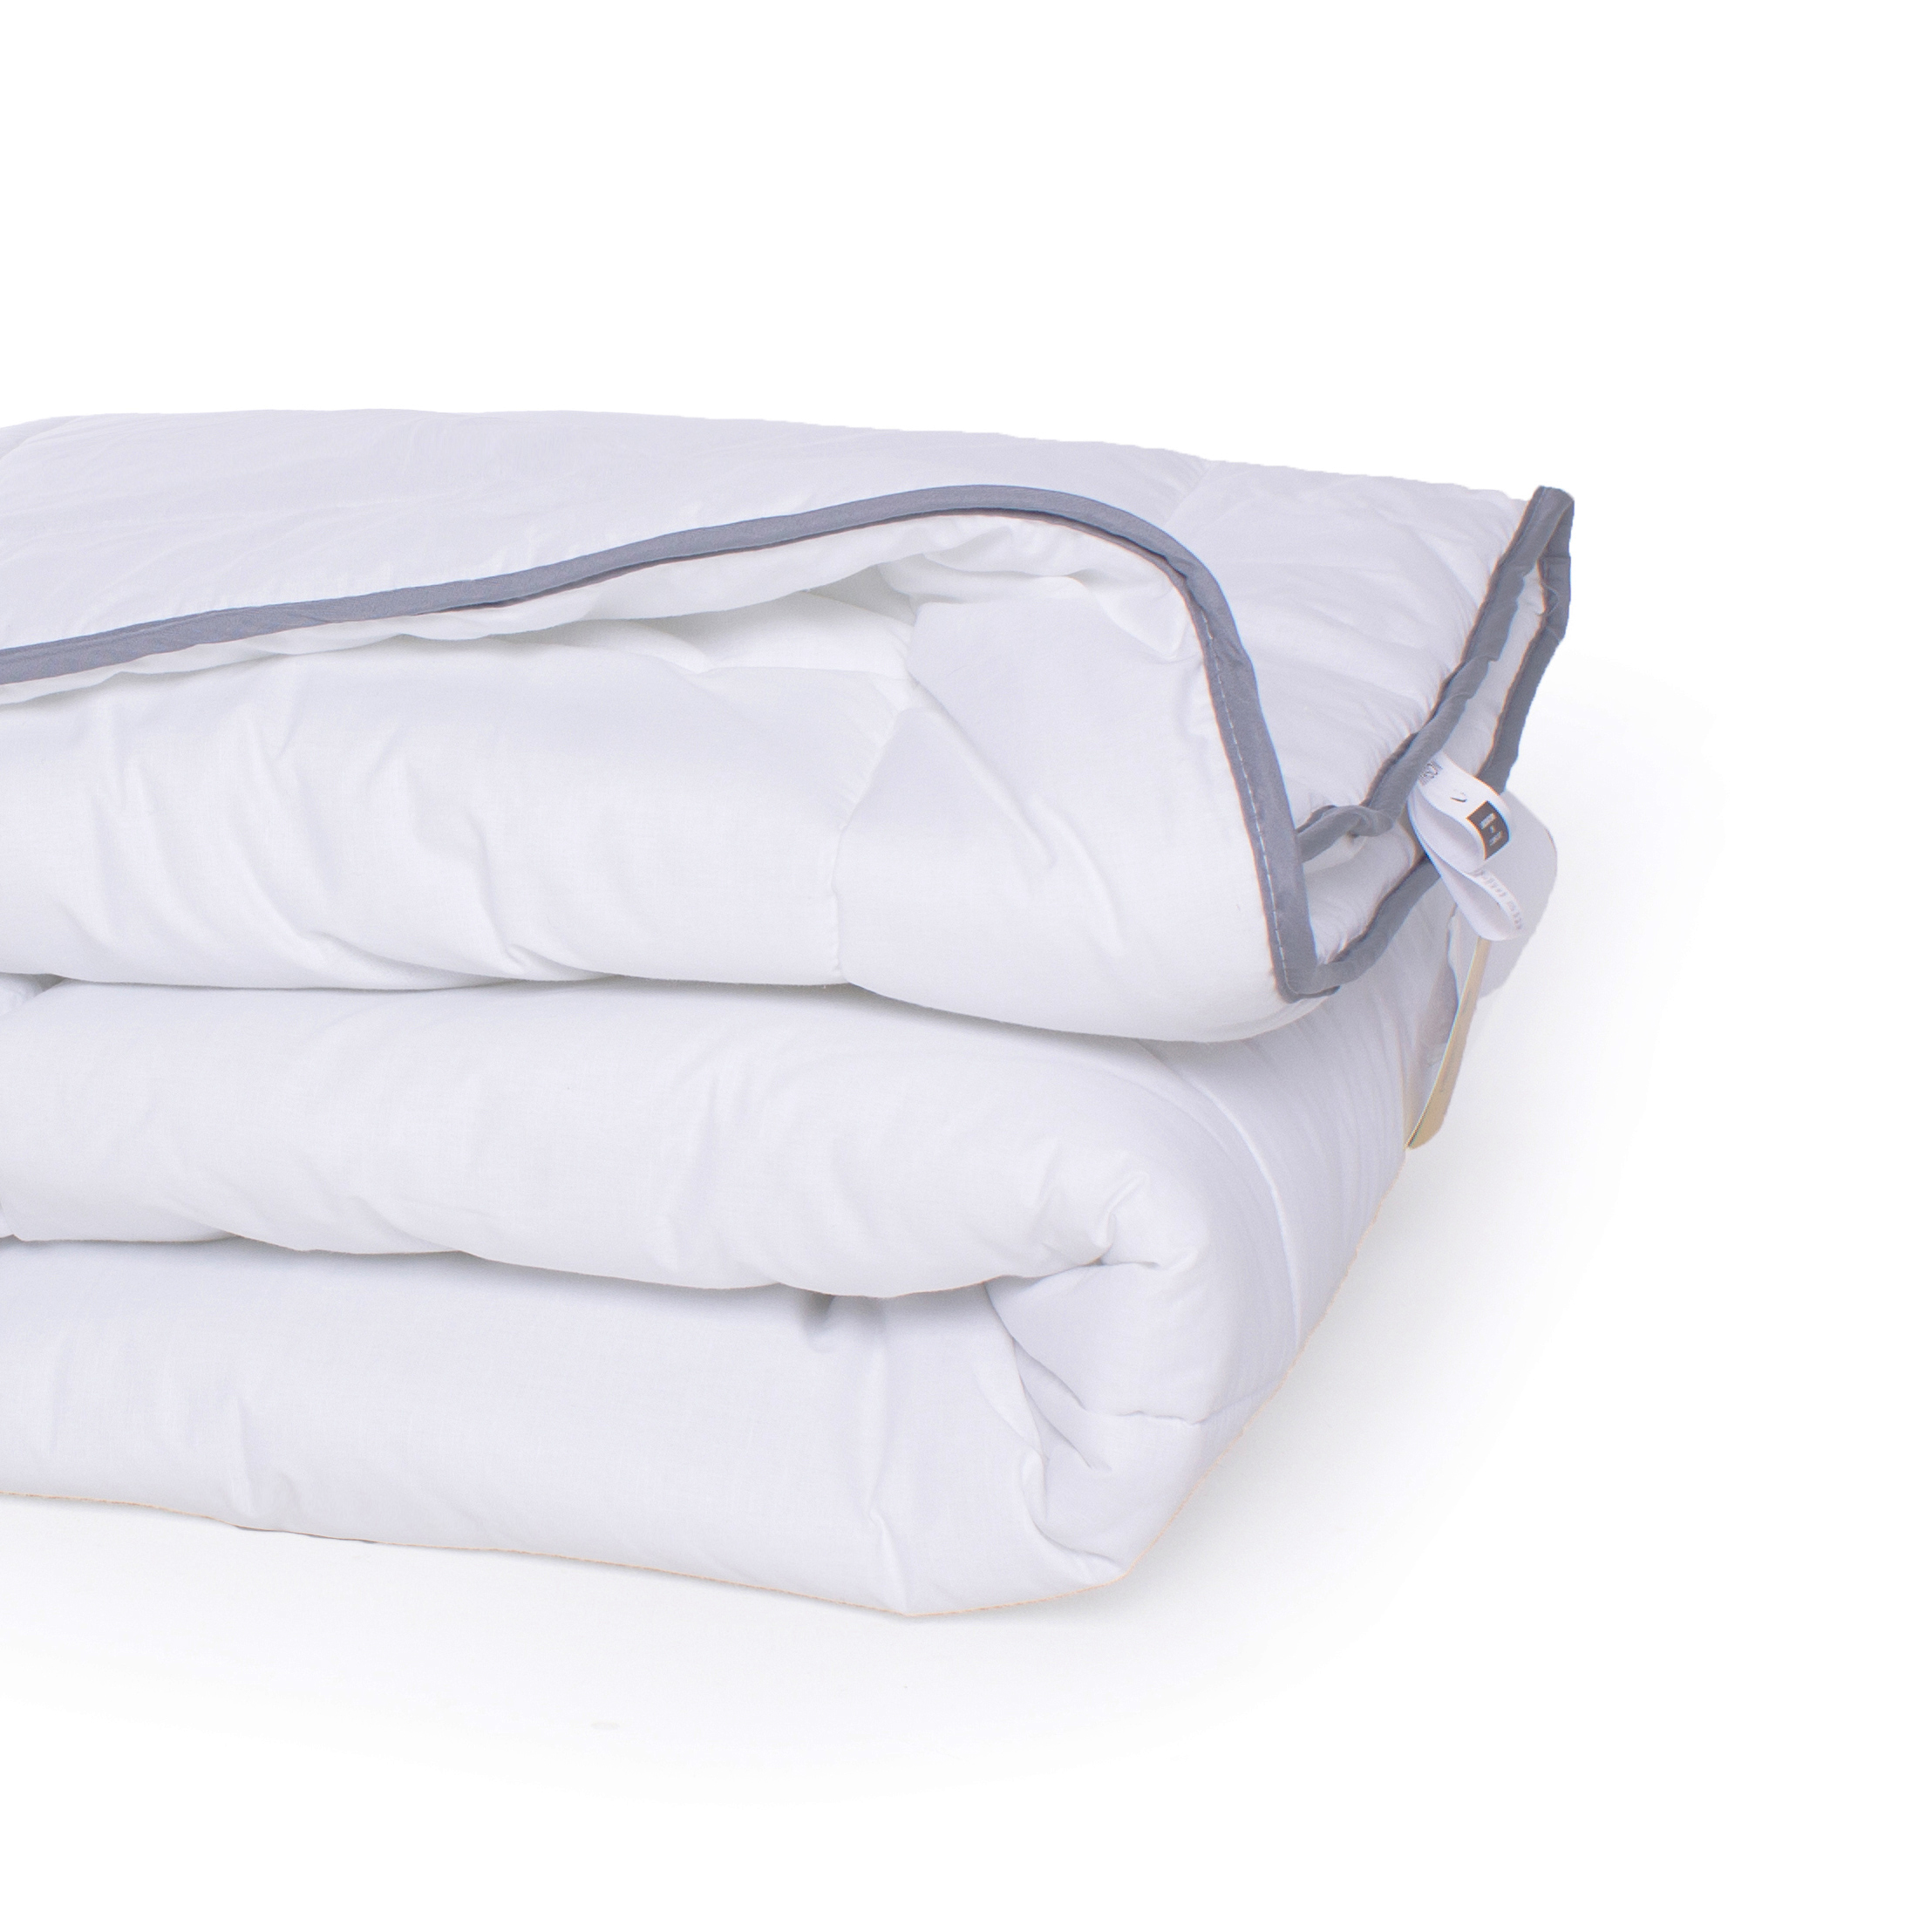 Одеяло шерстяное MirSon Royal №026, демисезонное, 110x140 см, белое - фото 4